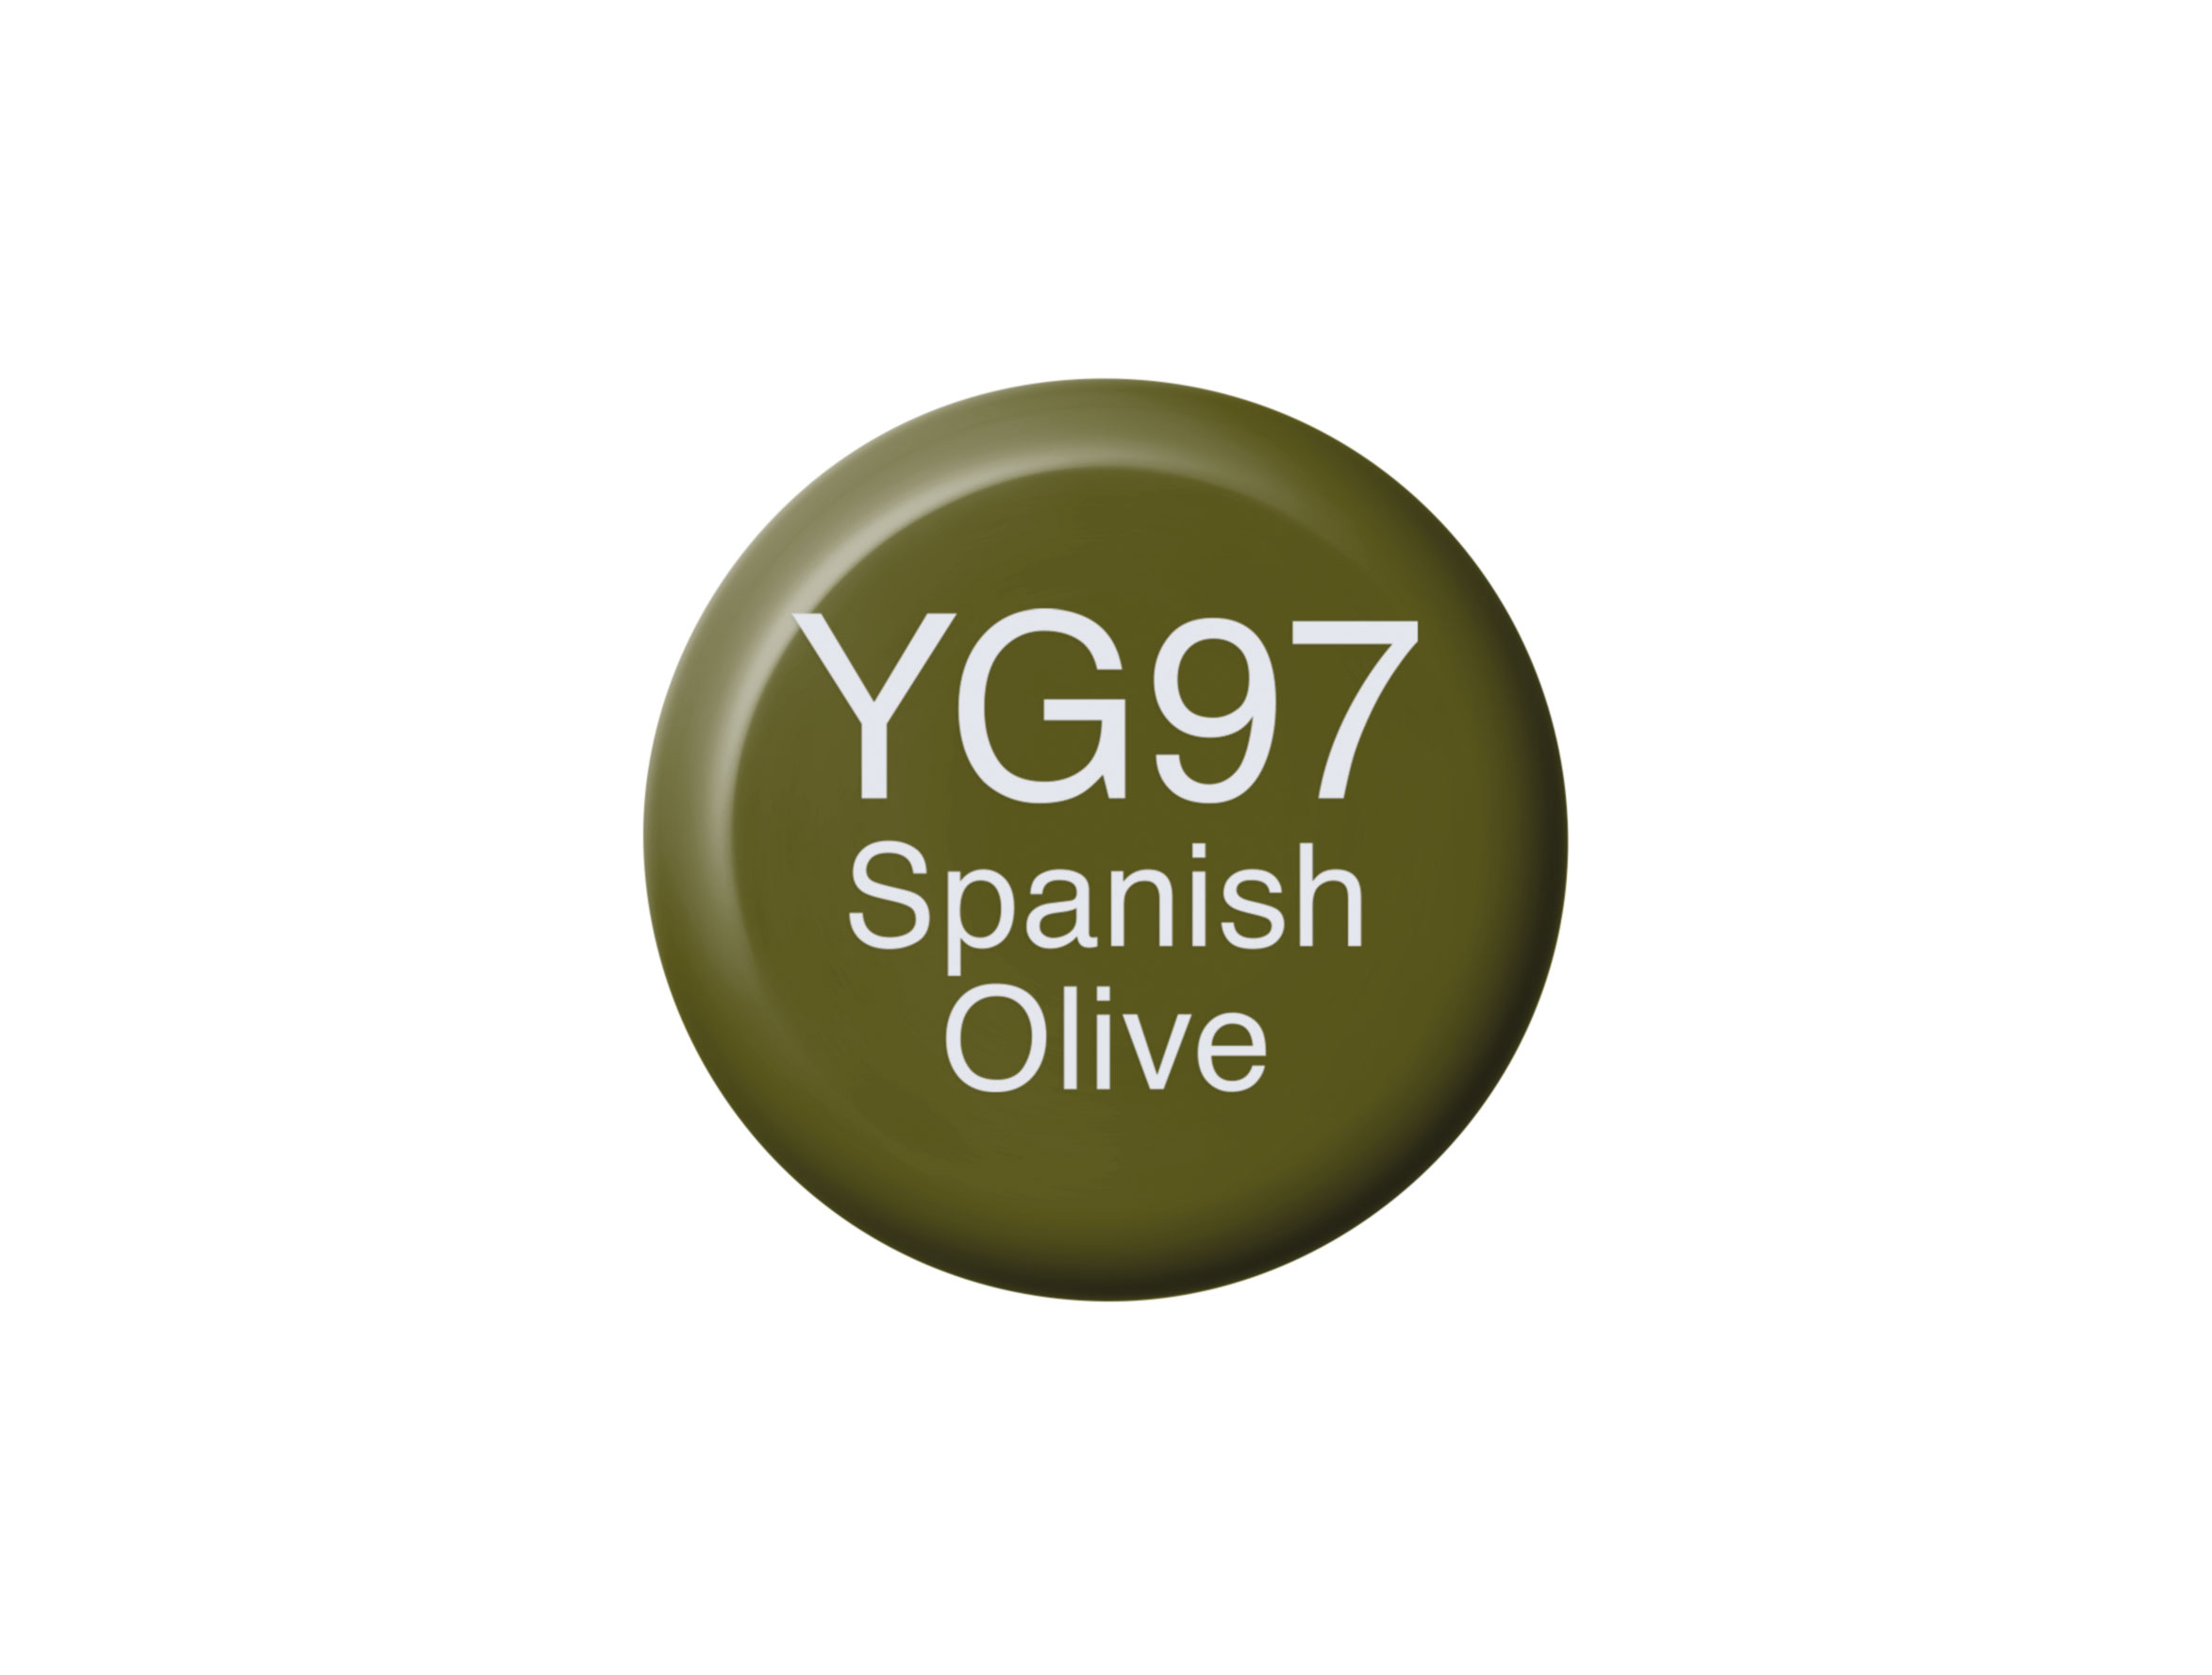 Copic Ink YG97 Spanish Olive